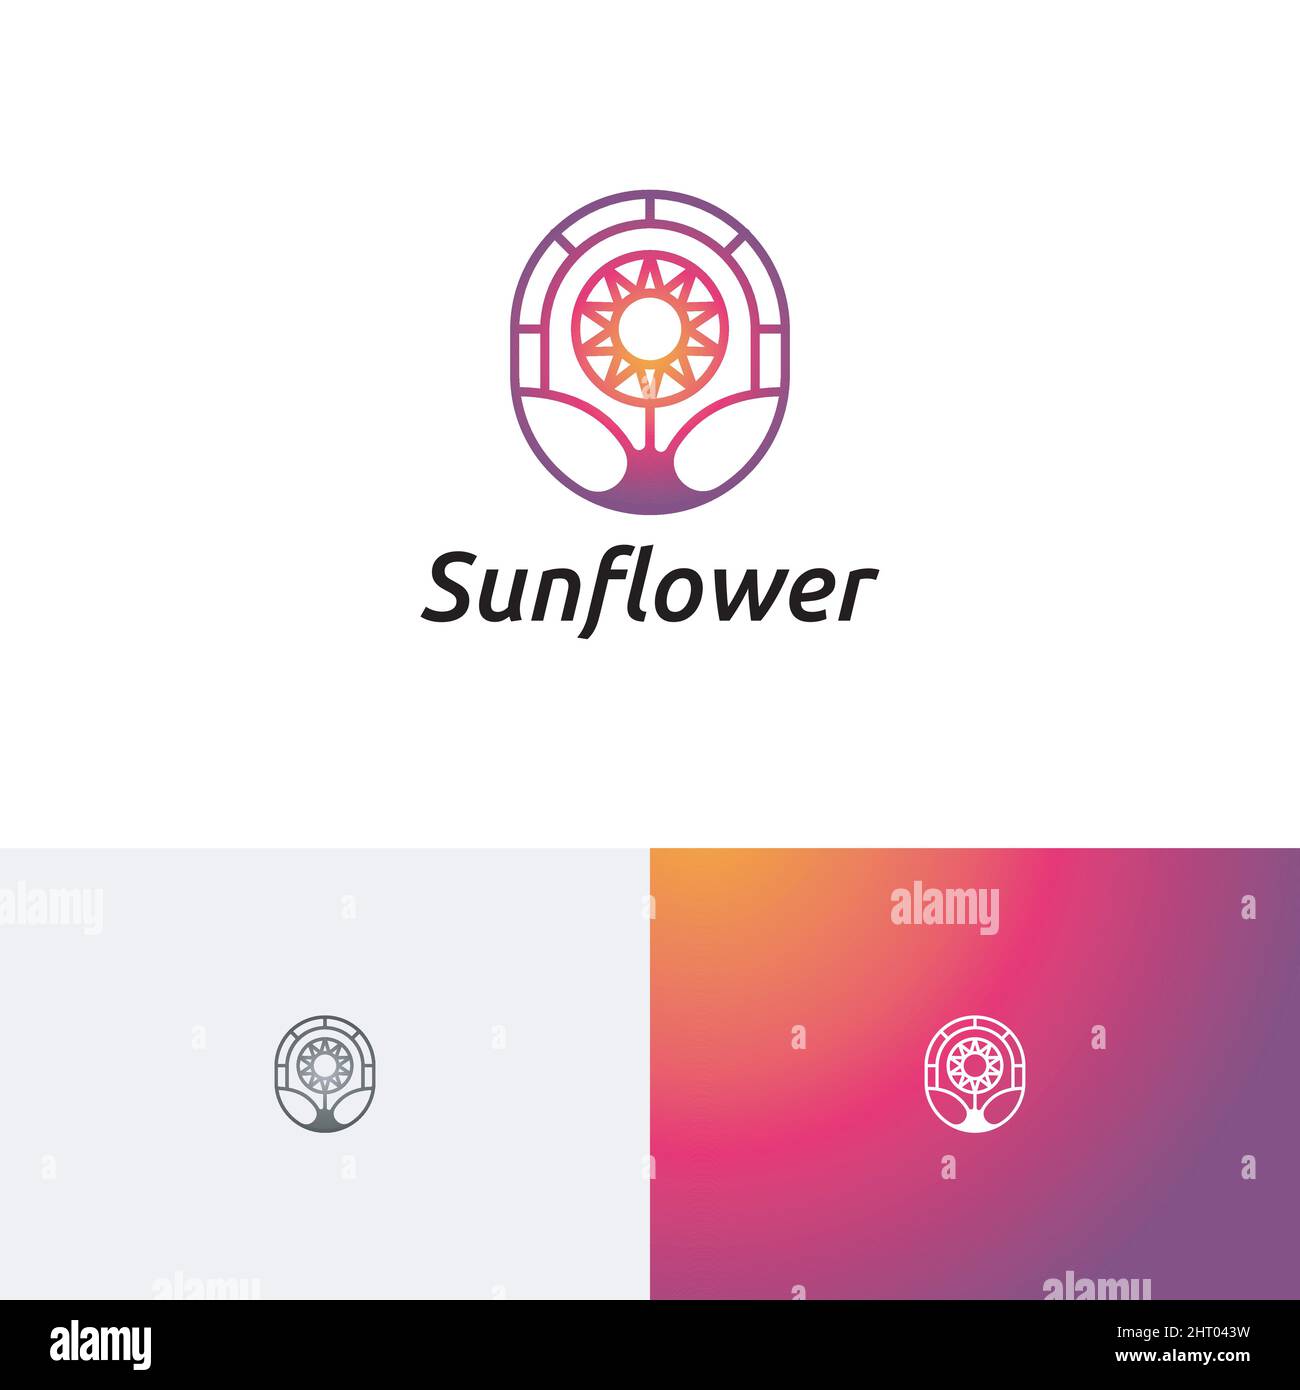 Finestra Sunflower Sun Flower Floral Florist Logo Template Illustrazione Vettoriale